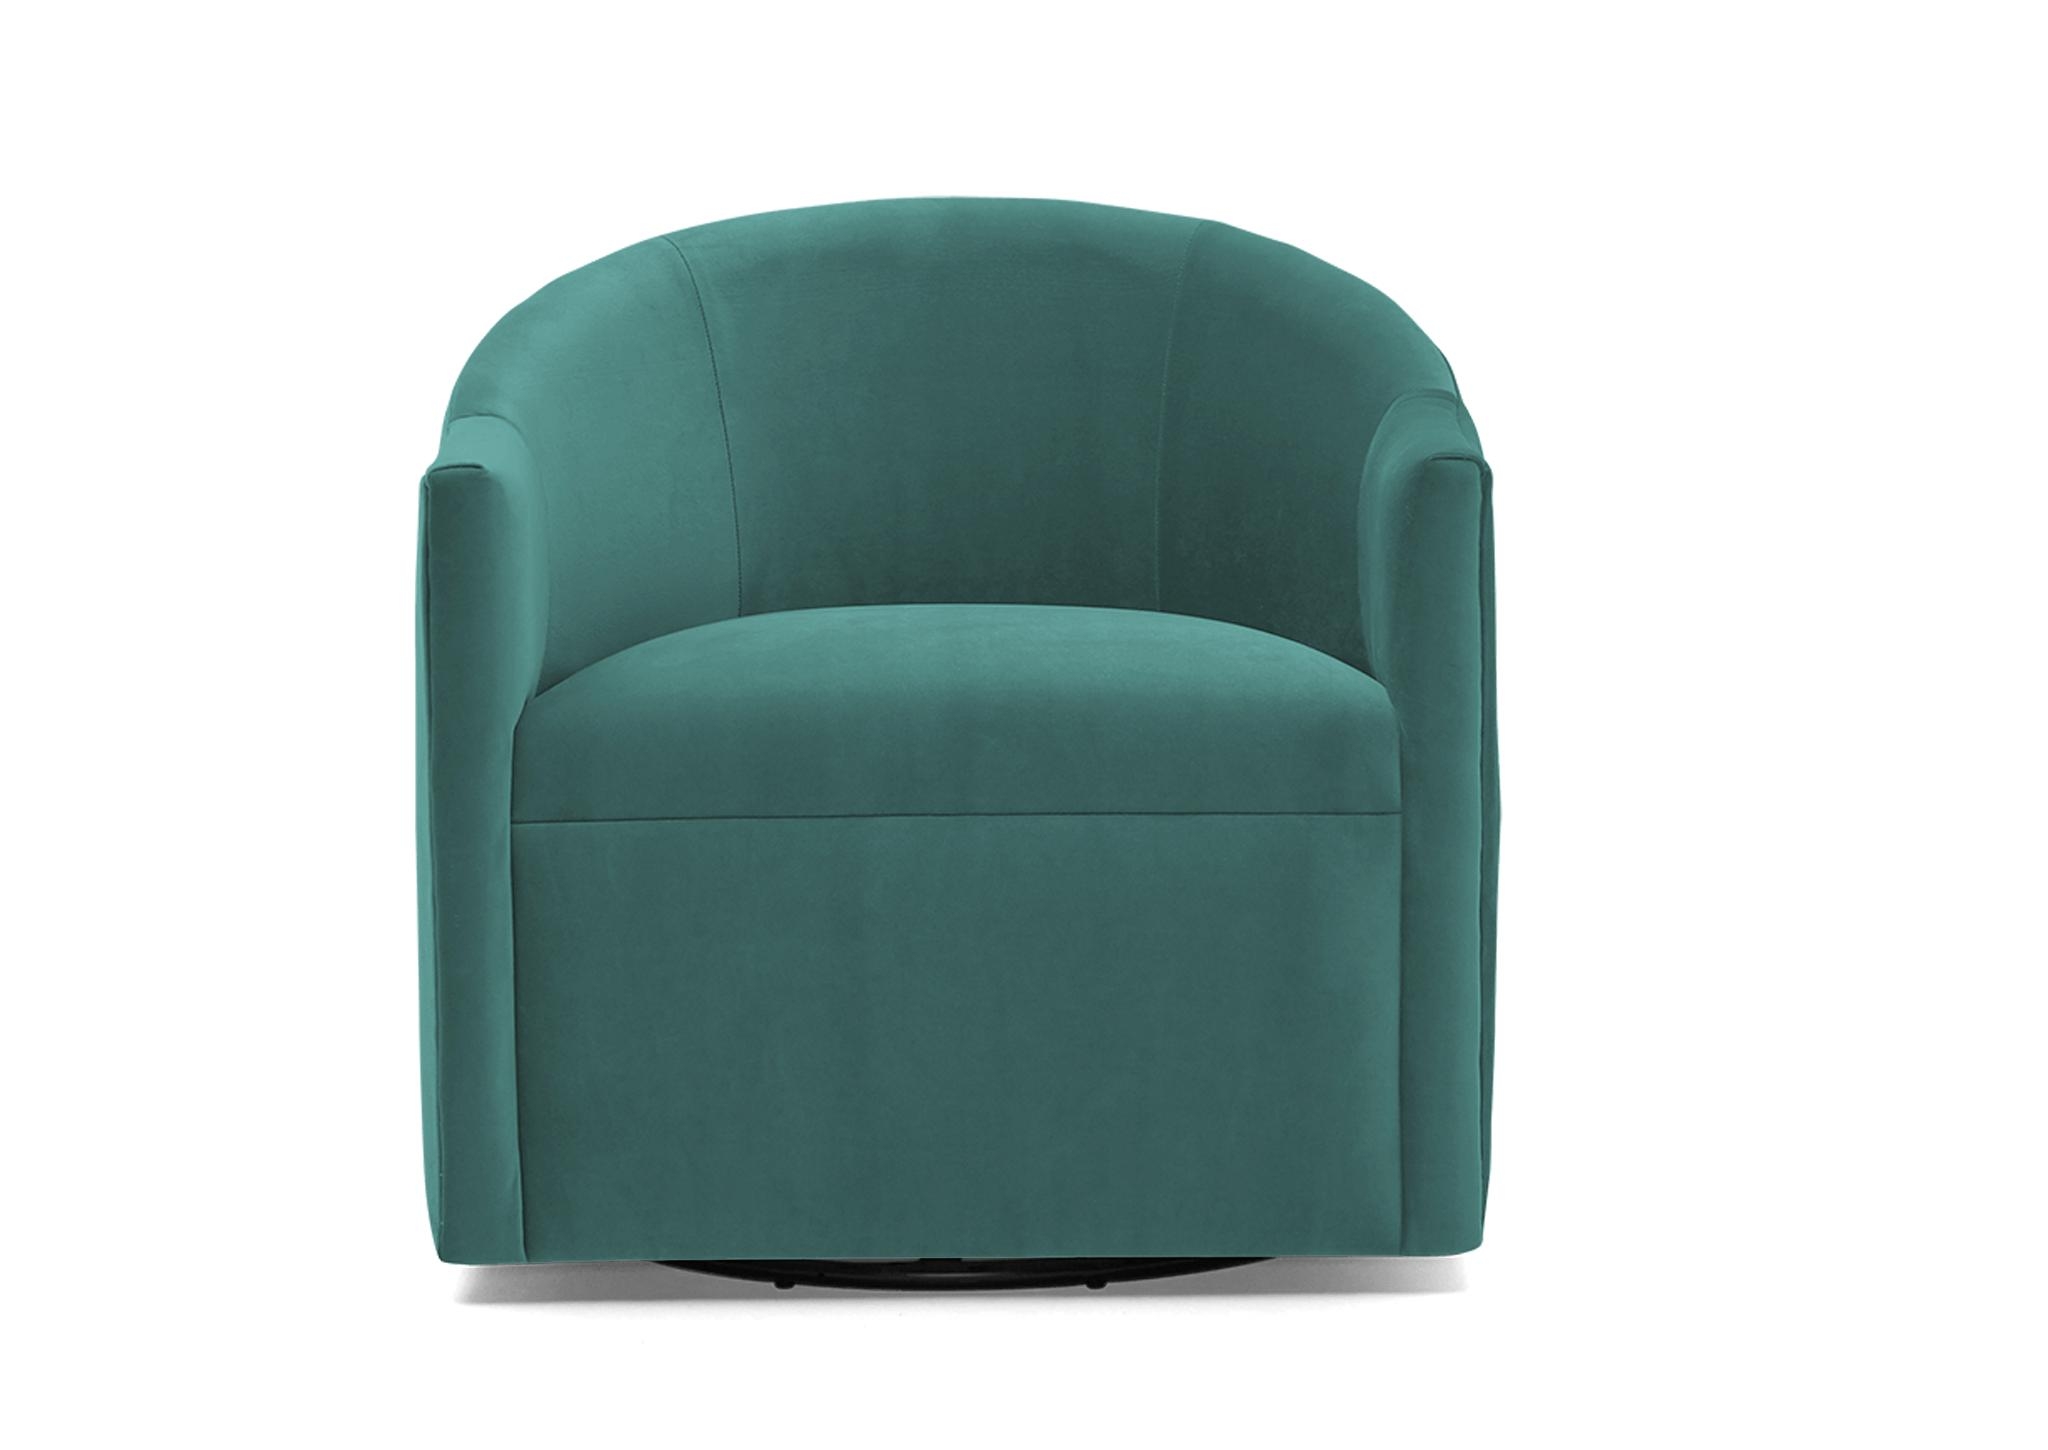 Green Jolie Mid Century Modern Swivel Chair - Essence Aqua - Image 1